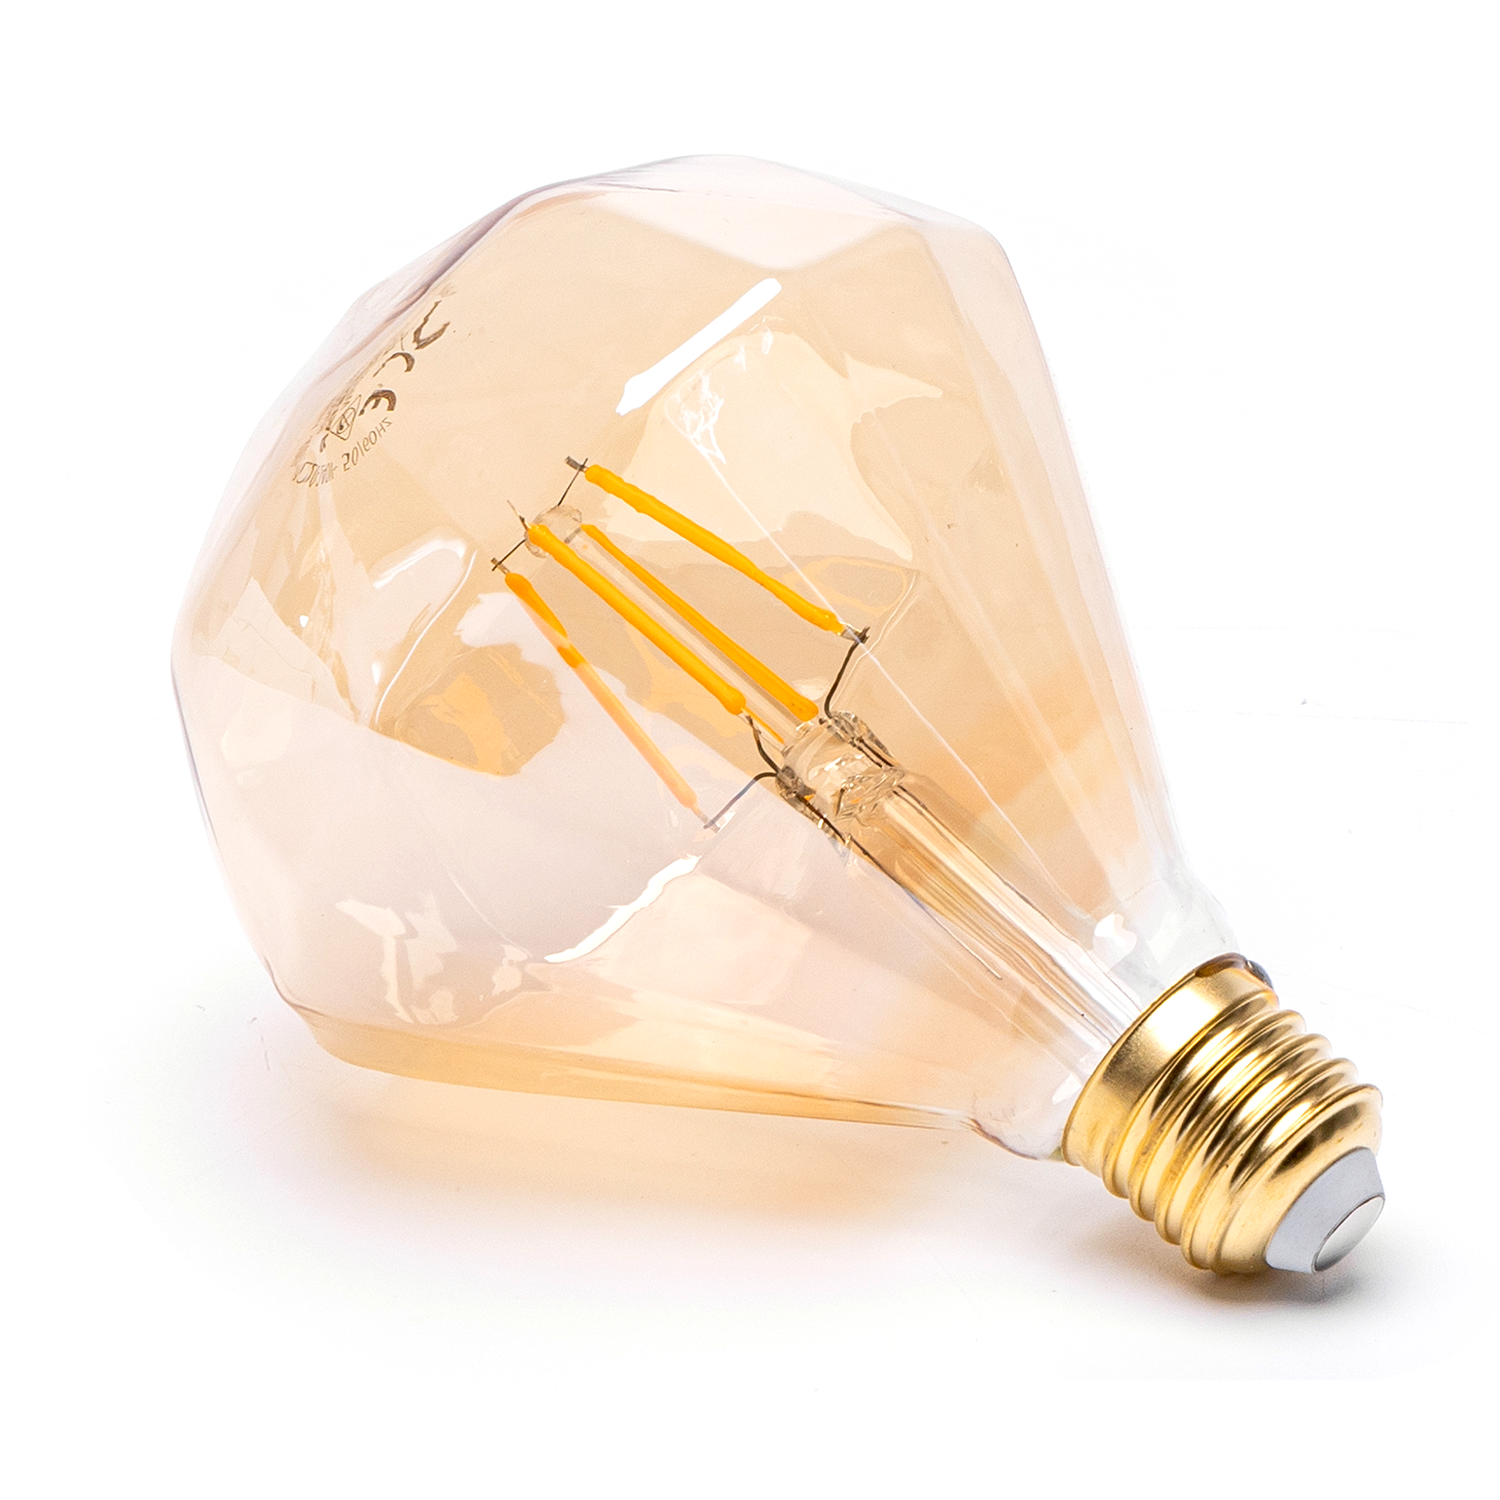 LED Leuchtmittel Filament Glühlampe "Diamond" D110 Sockel E27 4W 1800K/Amber 320lm Ø110xH142mm